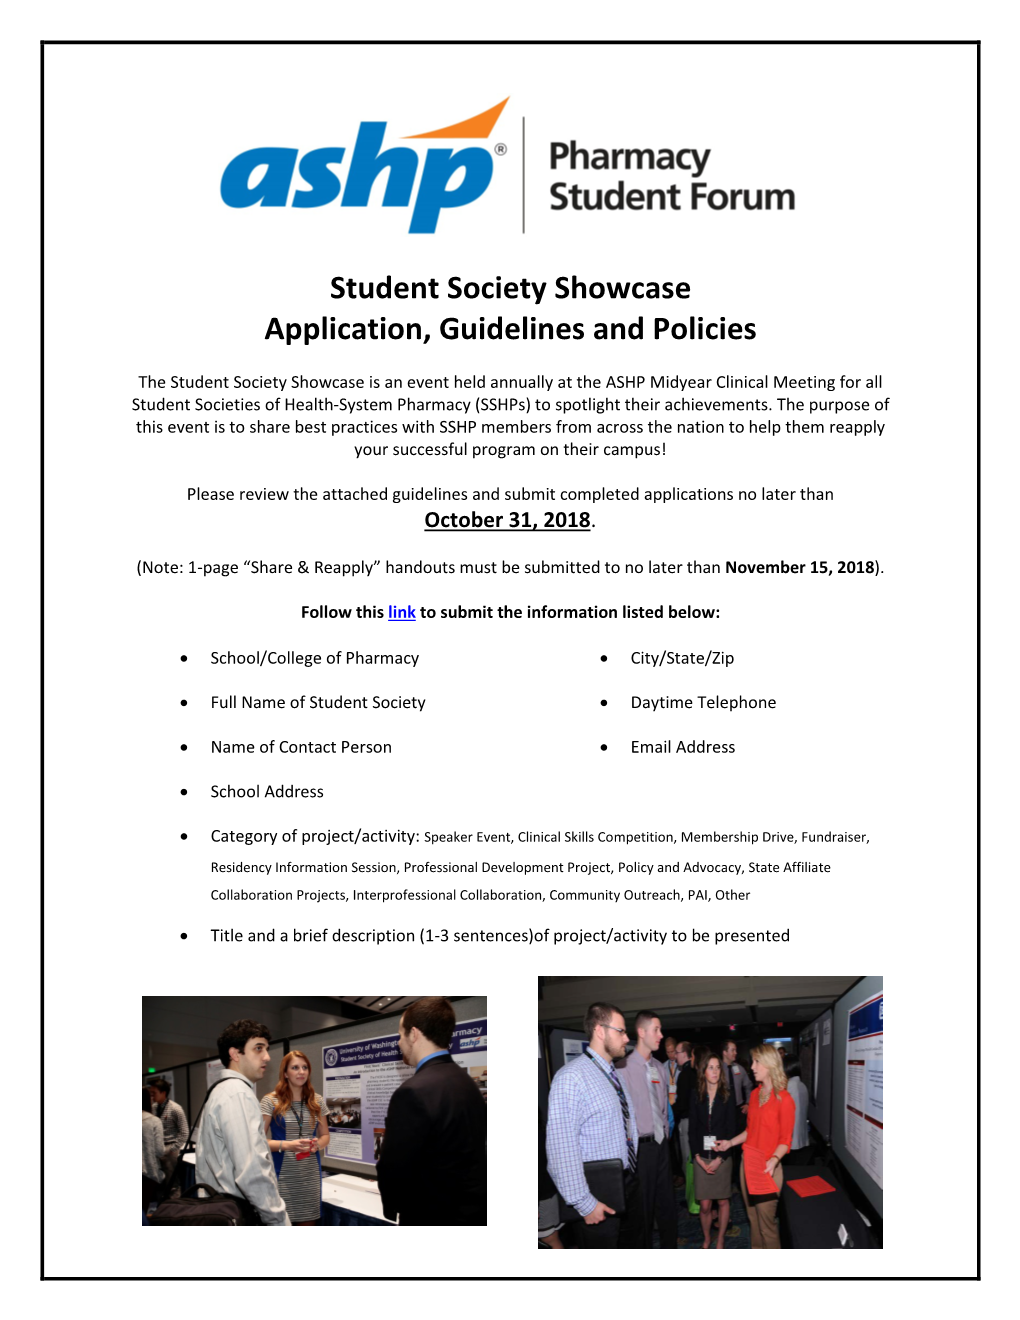 ASHP Pharmacy Student Forum